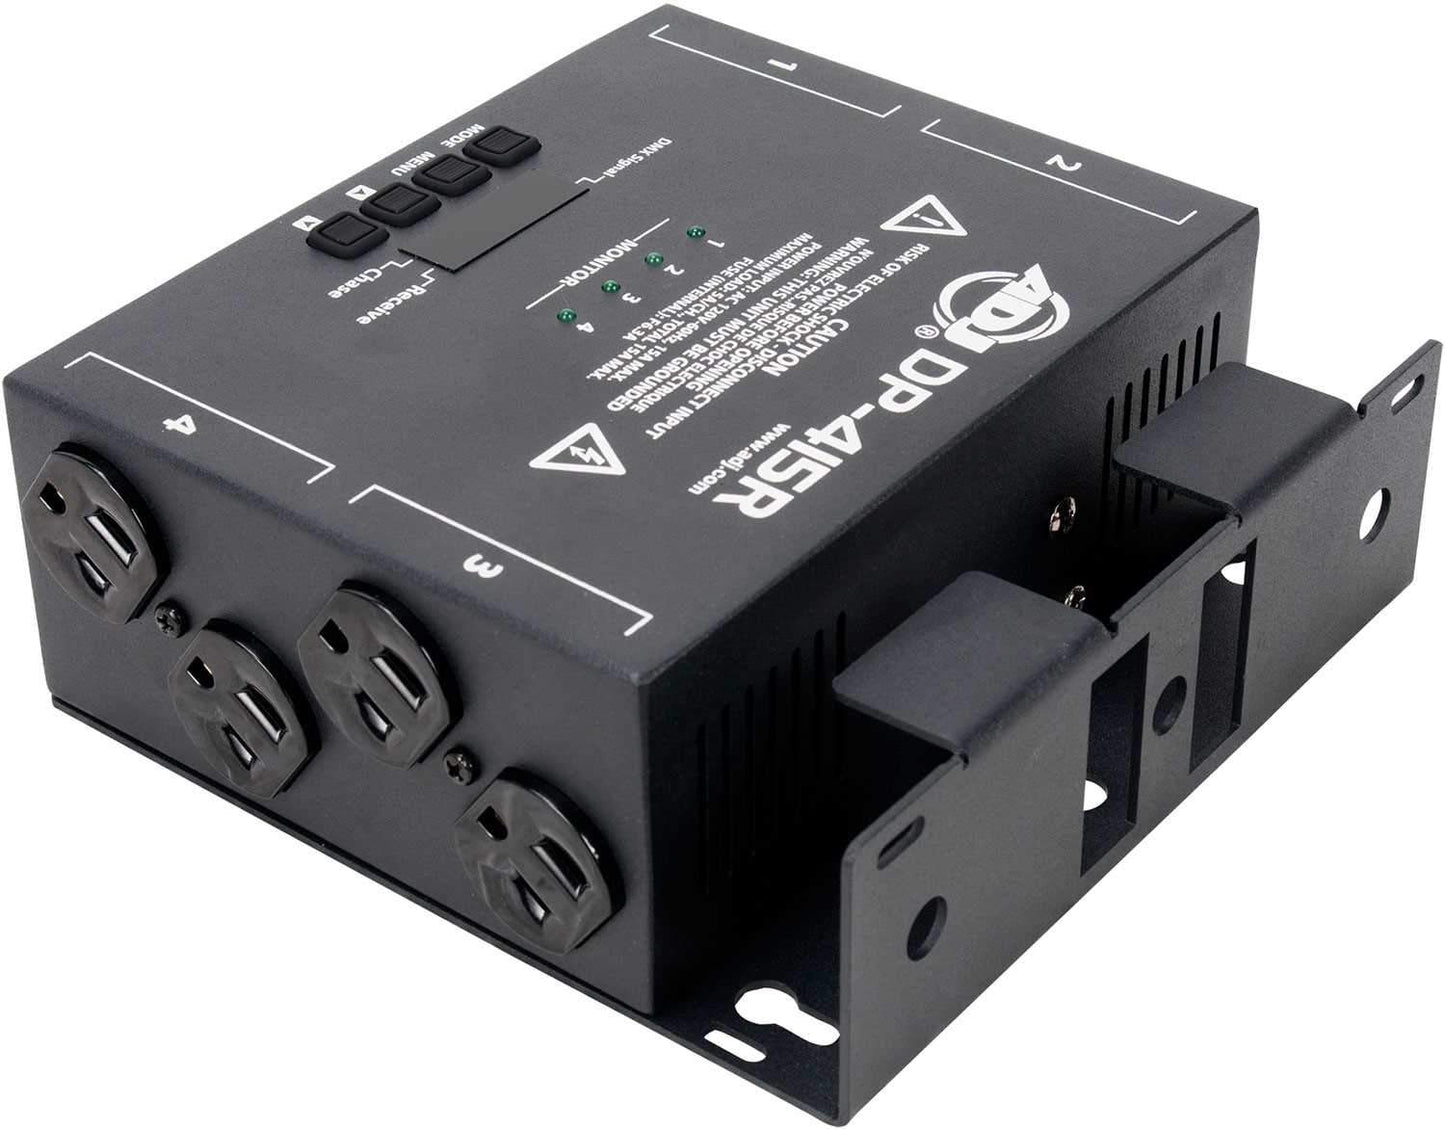 ADJ American DJ DP-415R 4-Channel DMX Dimmer / Switch Pack - ProSound and Stage Lighting